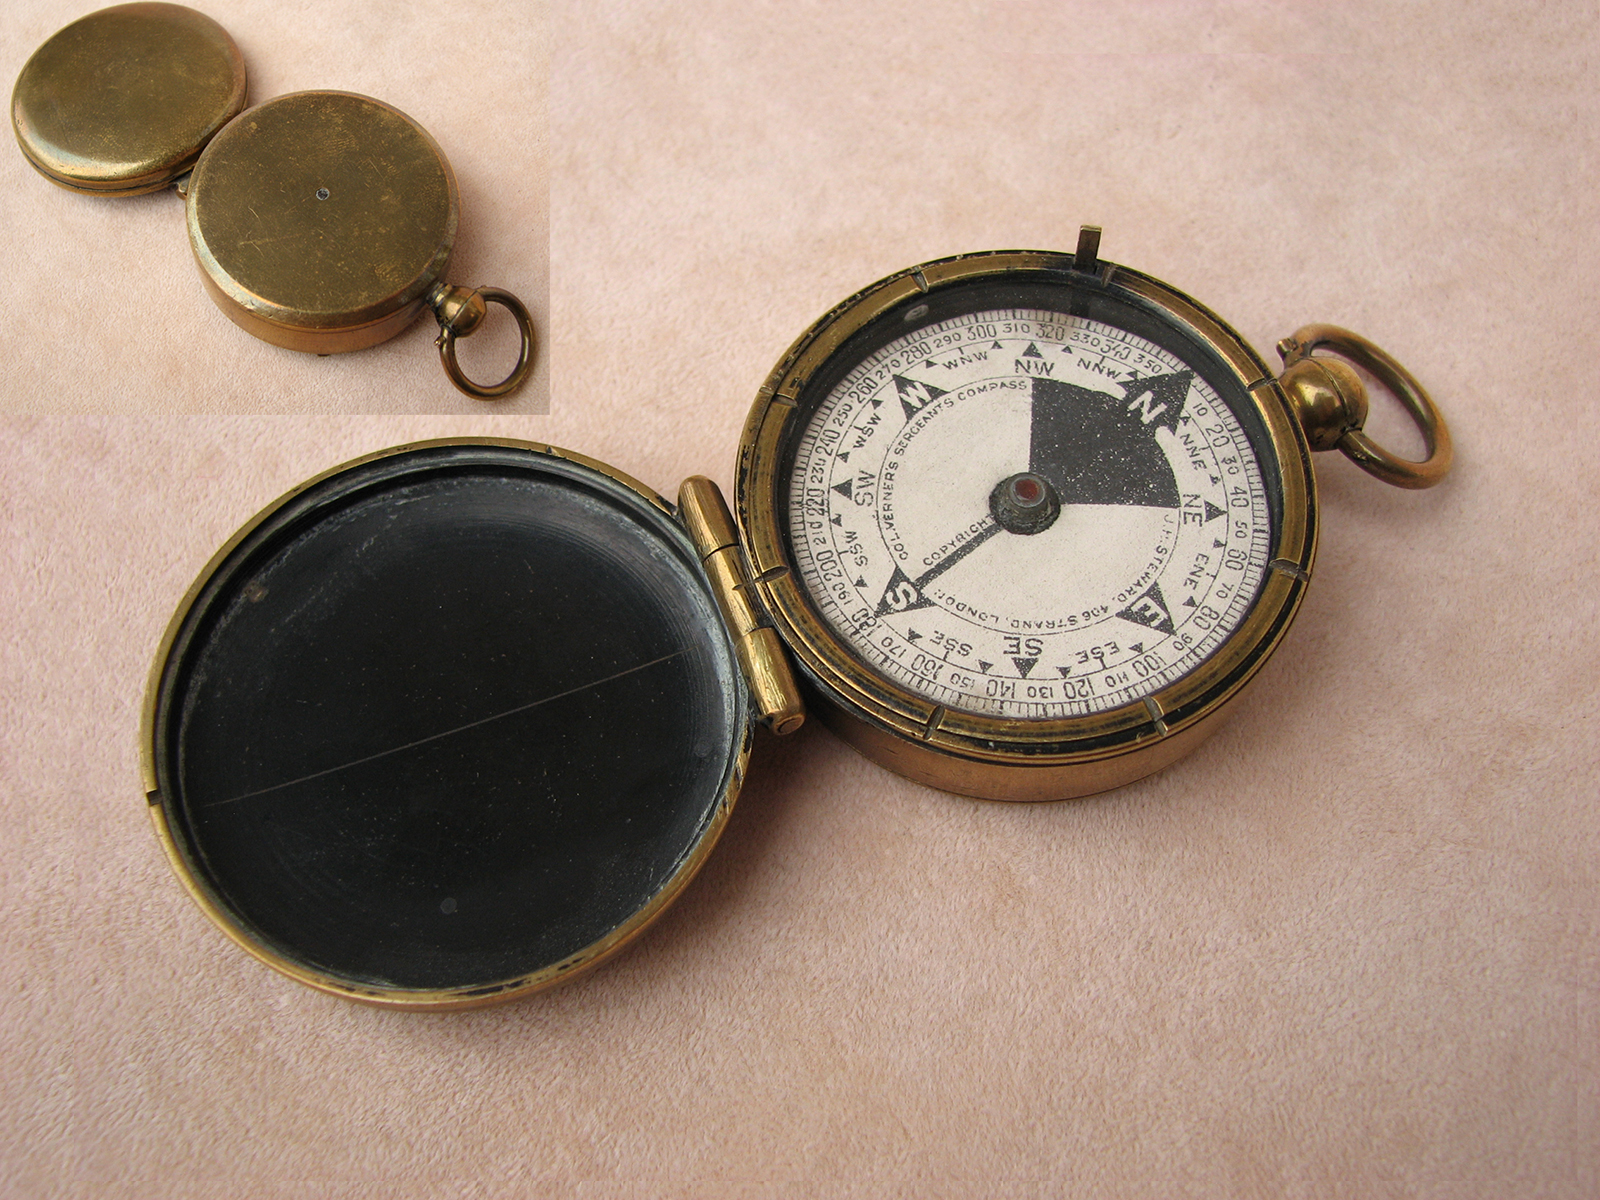 Col. Verner's Sergeant's compass by J. H. Steward, circa 1895